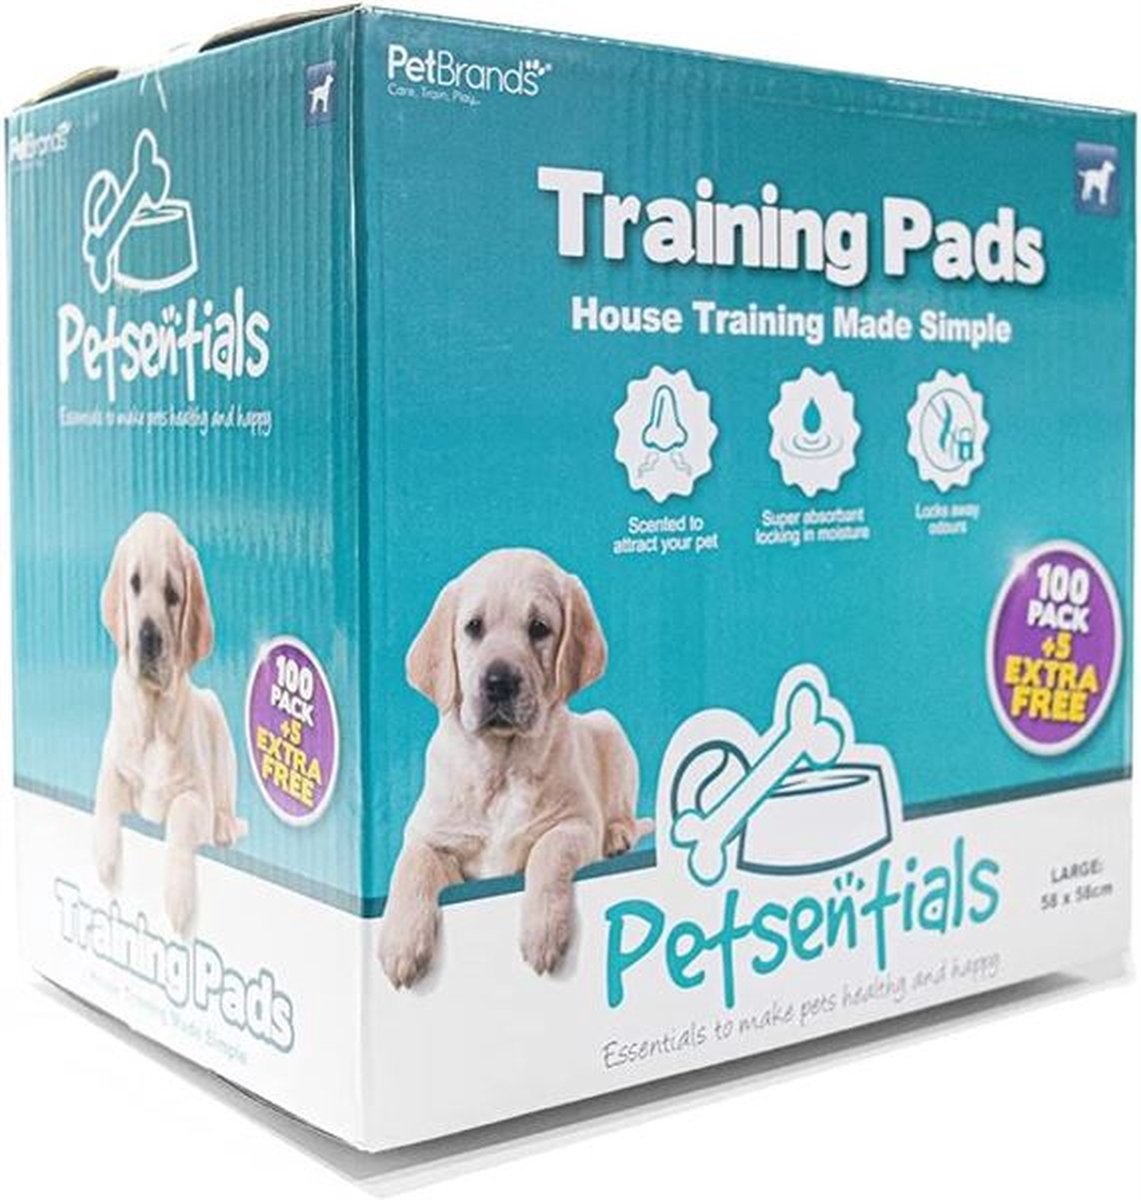 Petsentials Puppy Training Pads - 105 ST - Pet Sentials